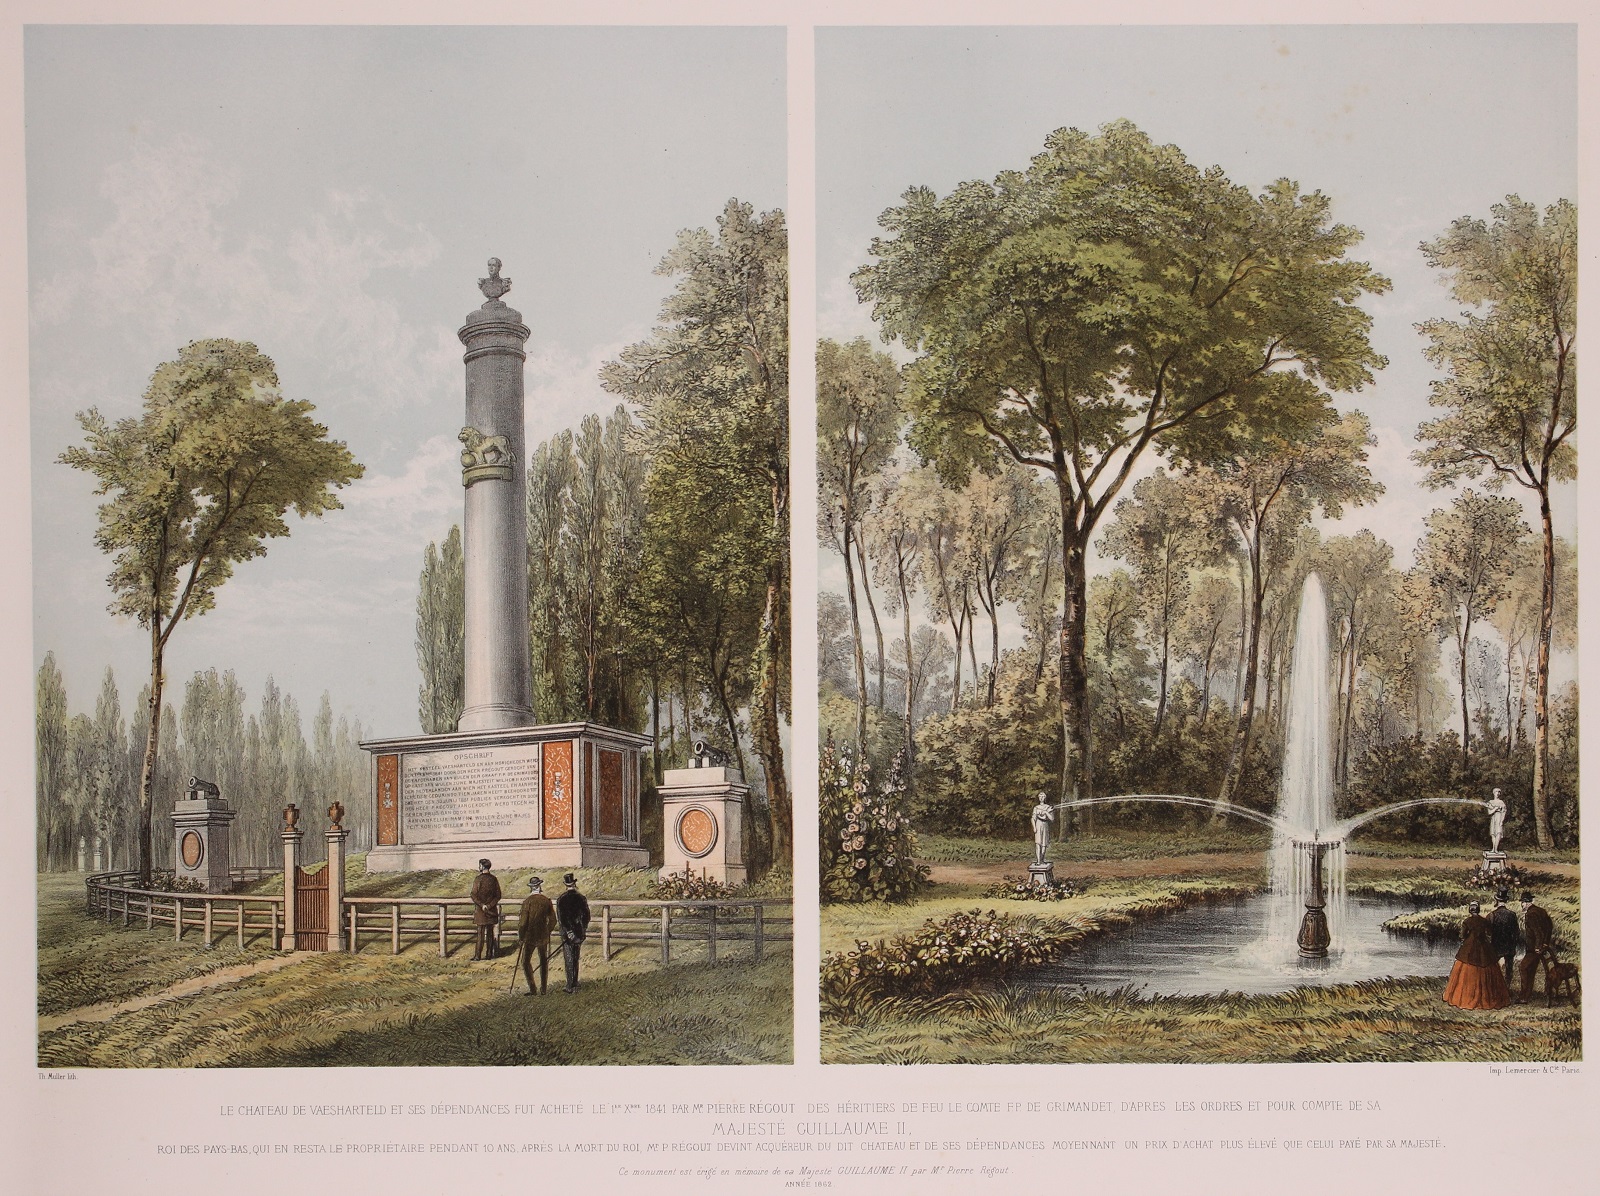  - Monument king William II, Vaeshartelt  - Theodore Mller + Lemercier, 1863